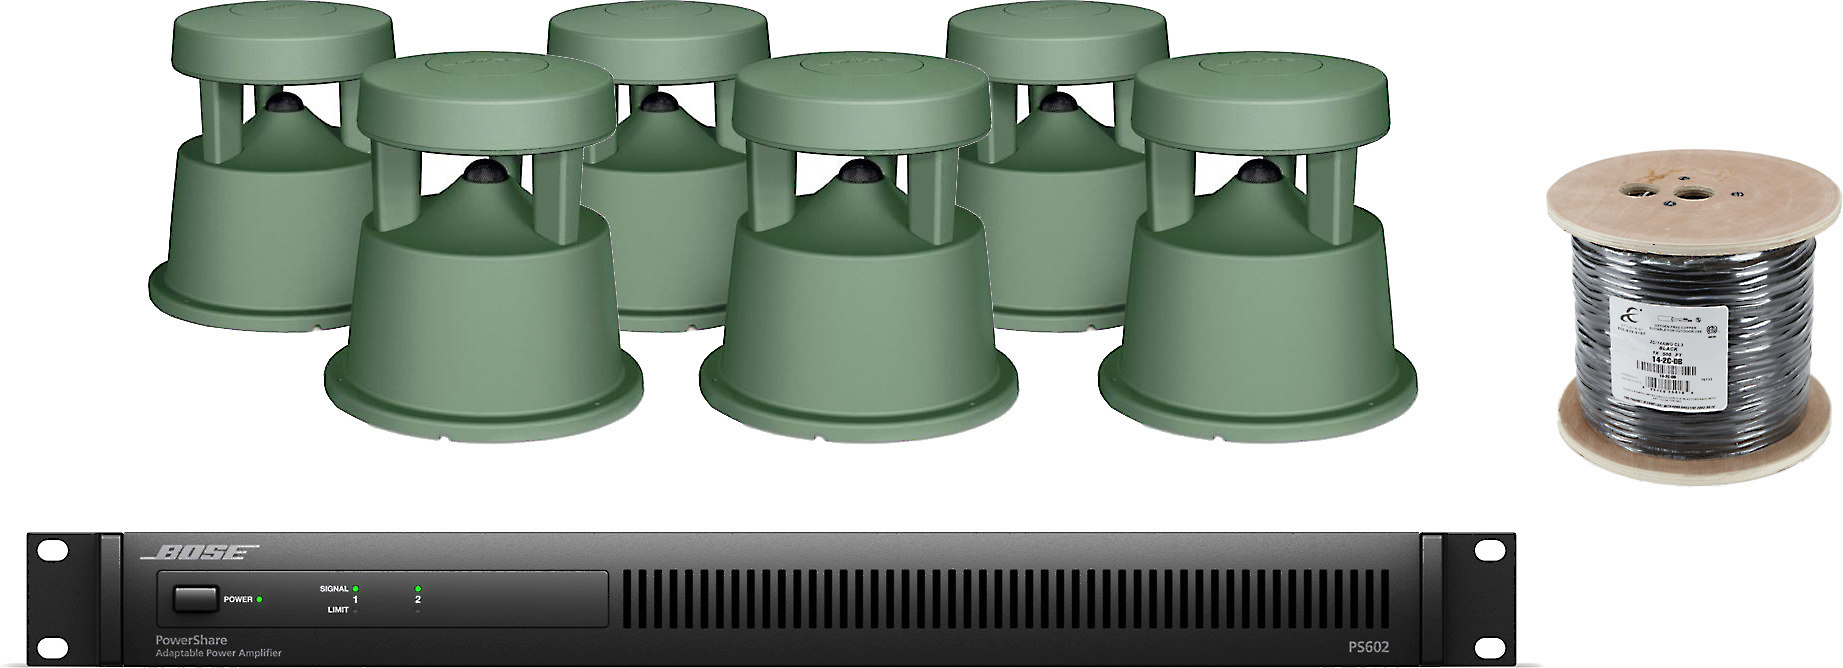 bose outdoor speakers green